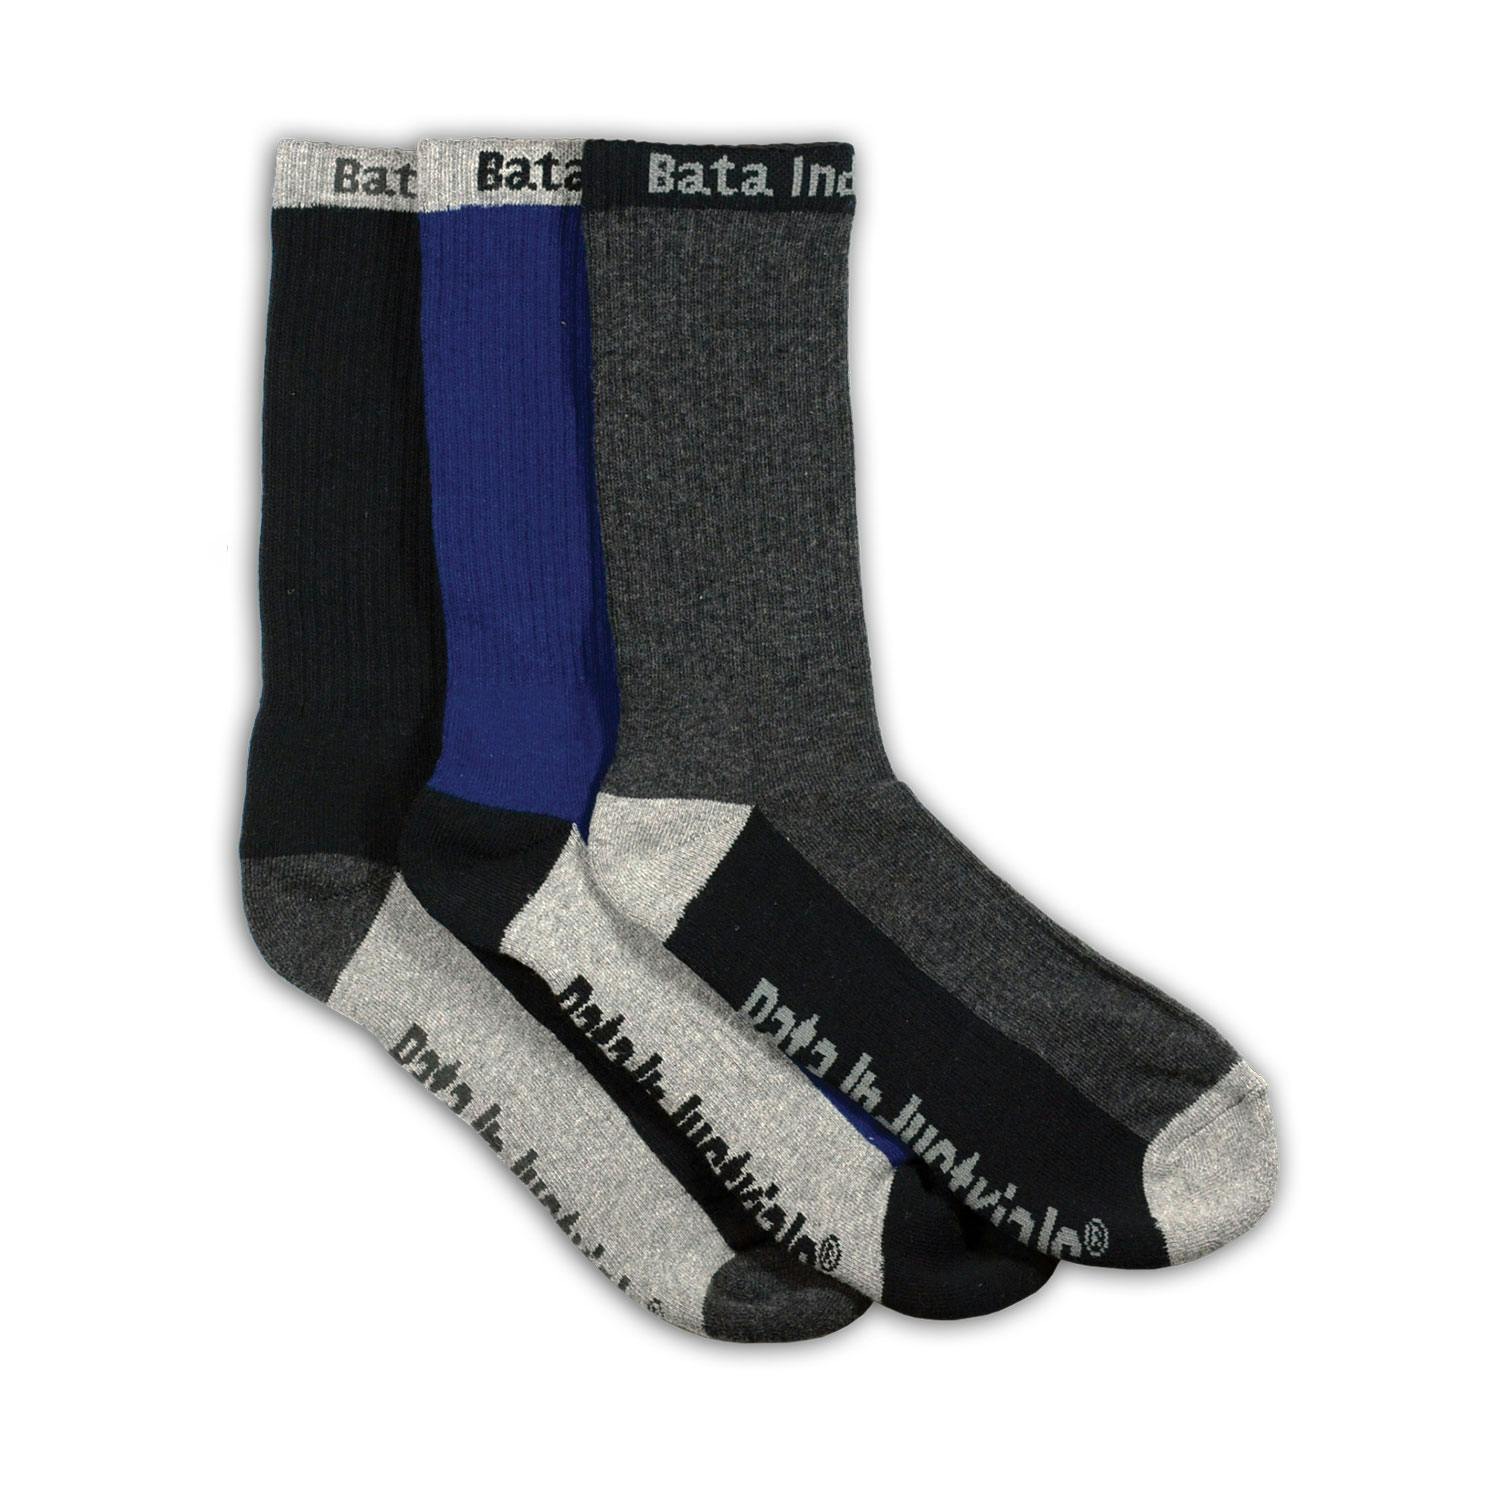 Bata Industrials Socks - Bright Crew Style Sock 3 Pack